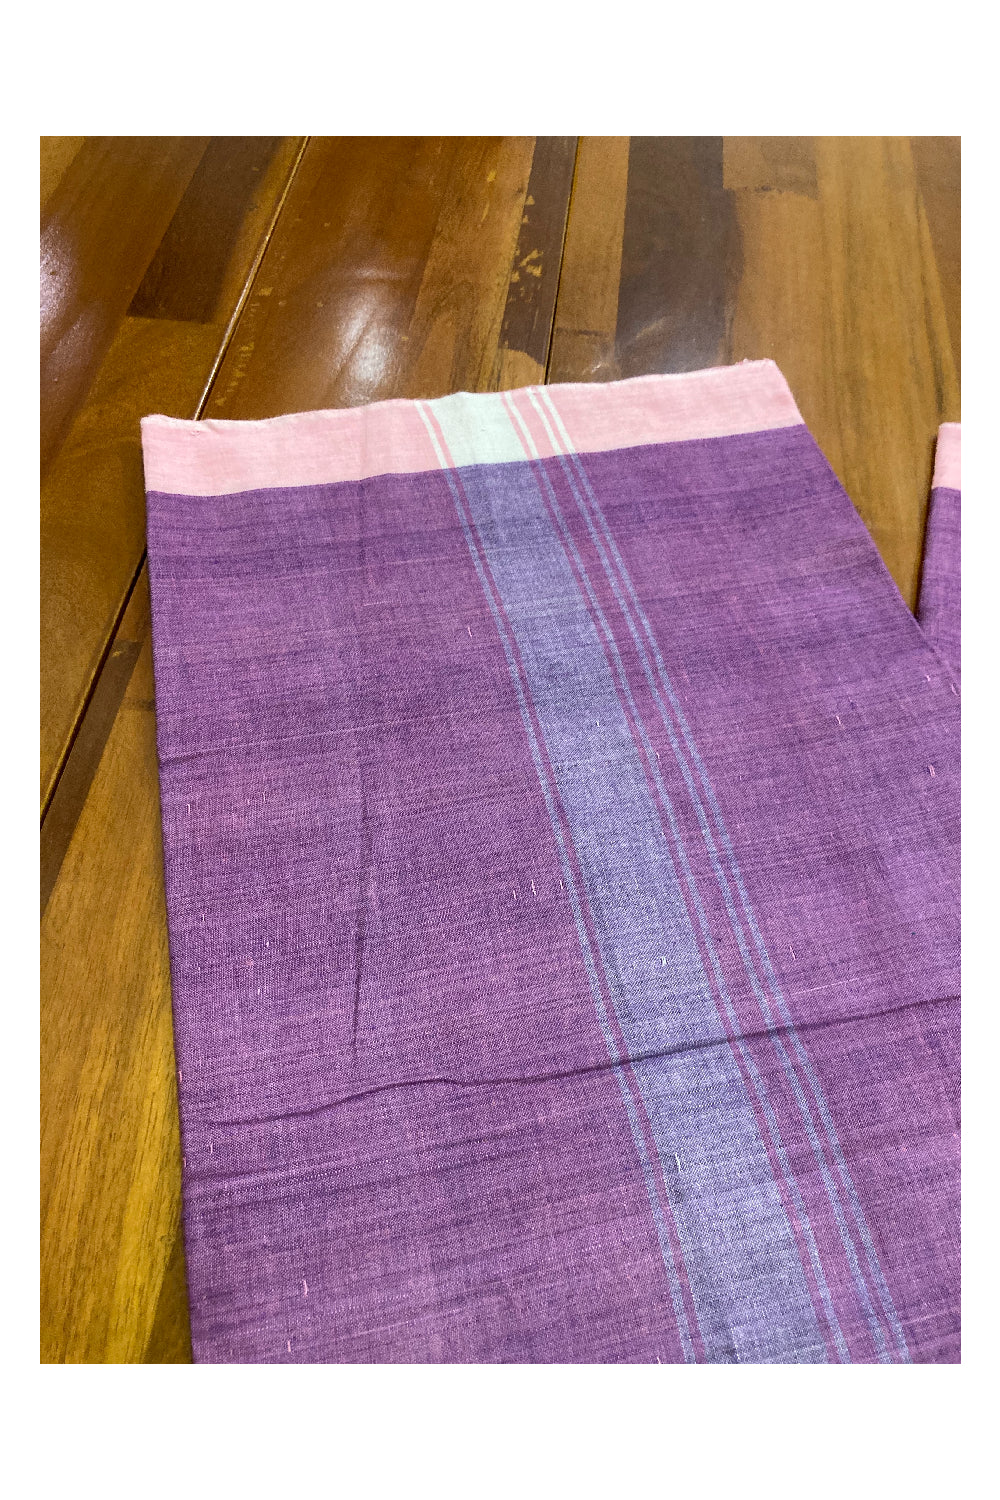 Southloom Premium Handloom Violet Solid Single Mundu (Lungi) with Grey Border